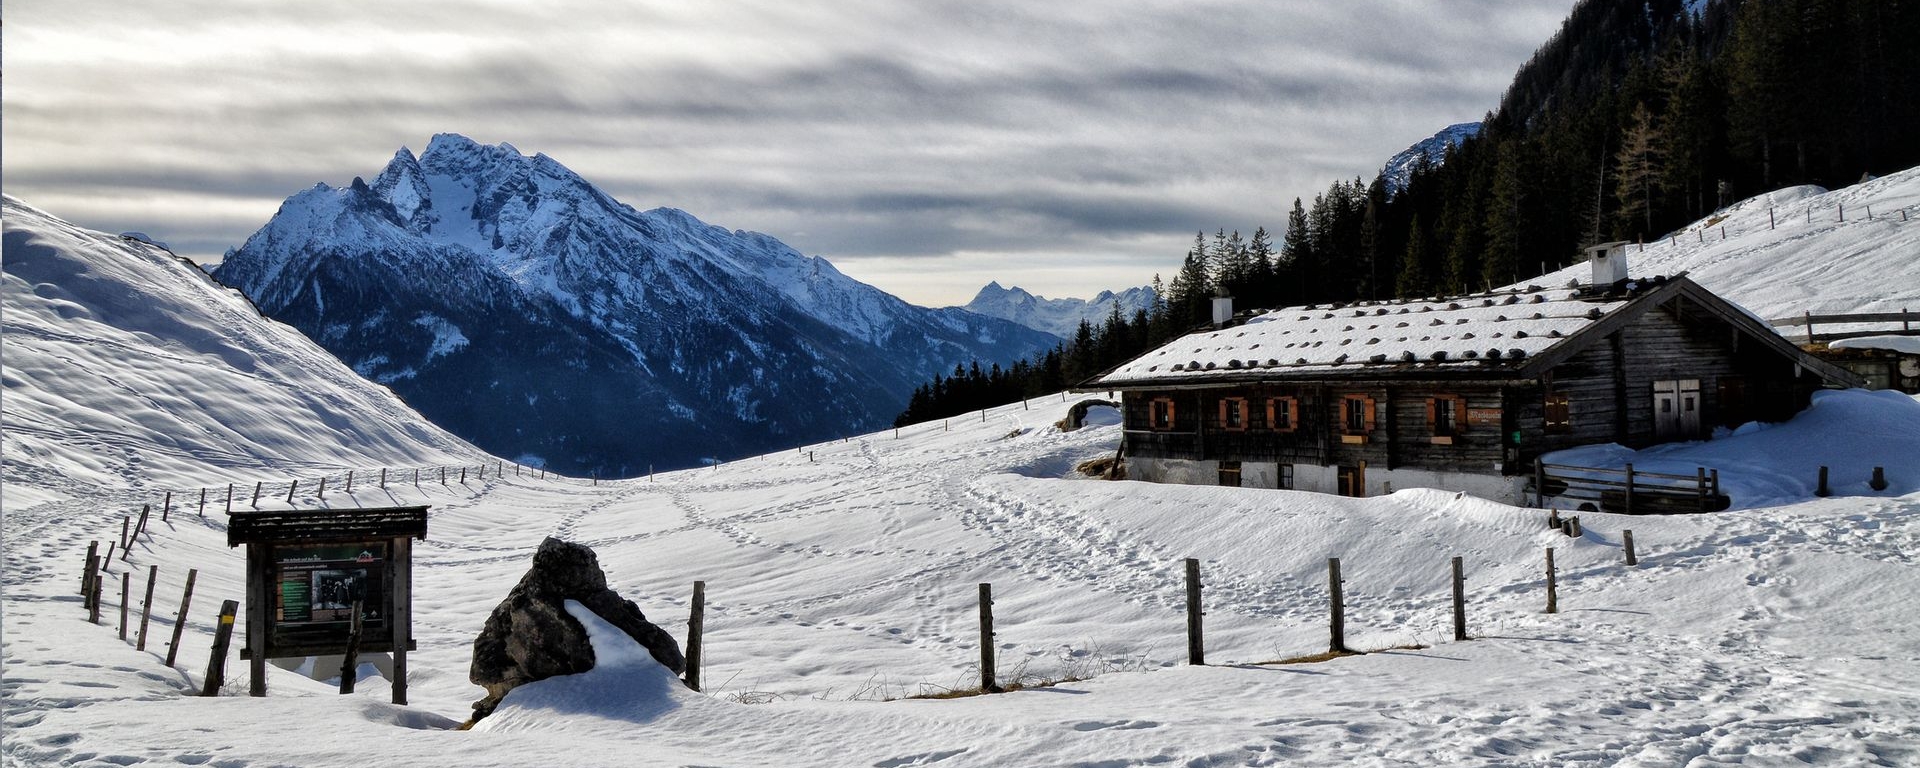 Berchtesgaden - Snowtours20